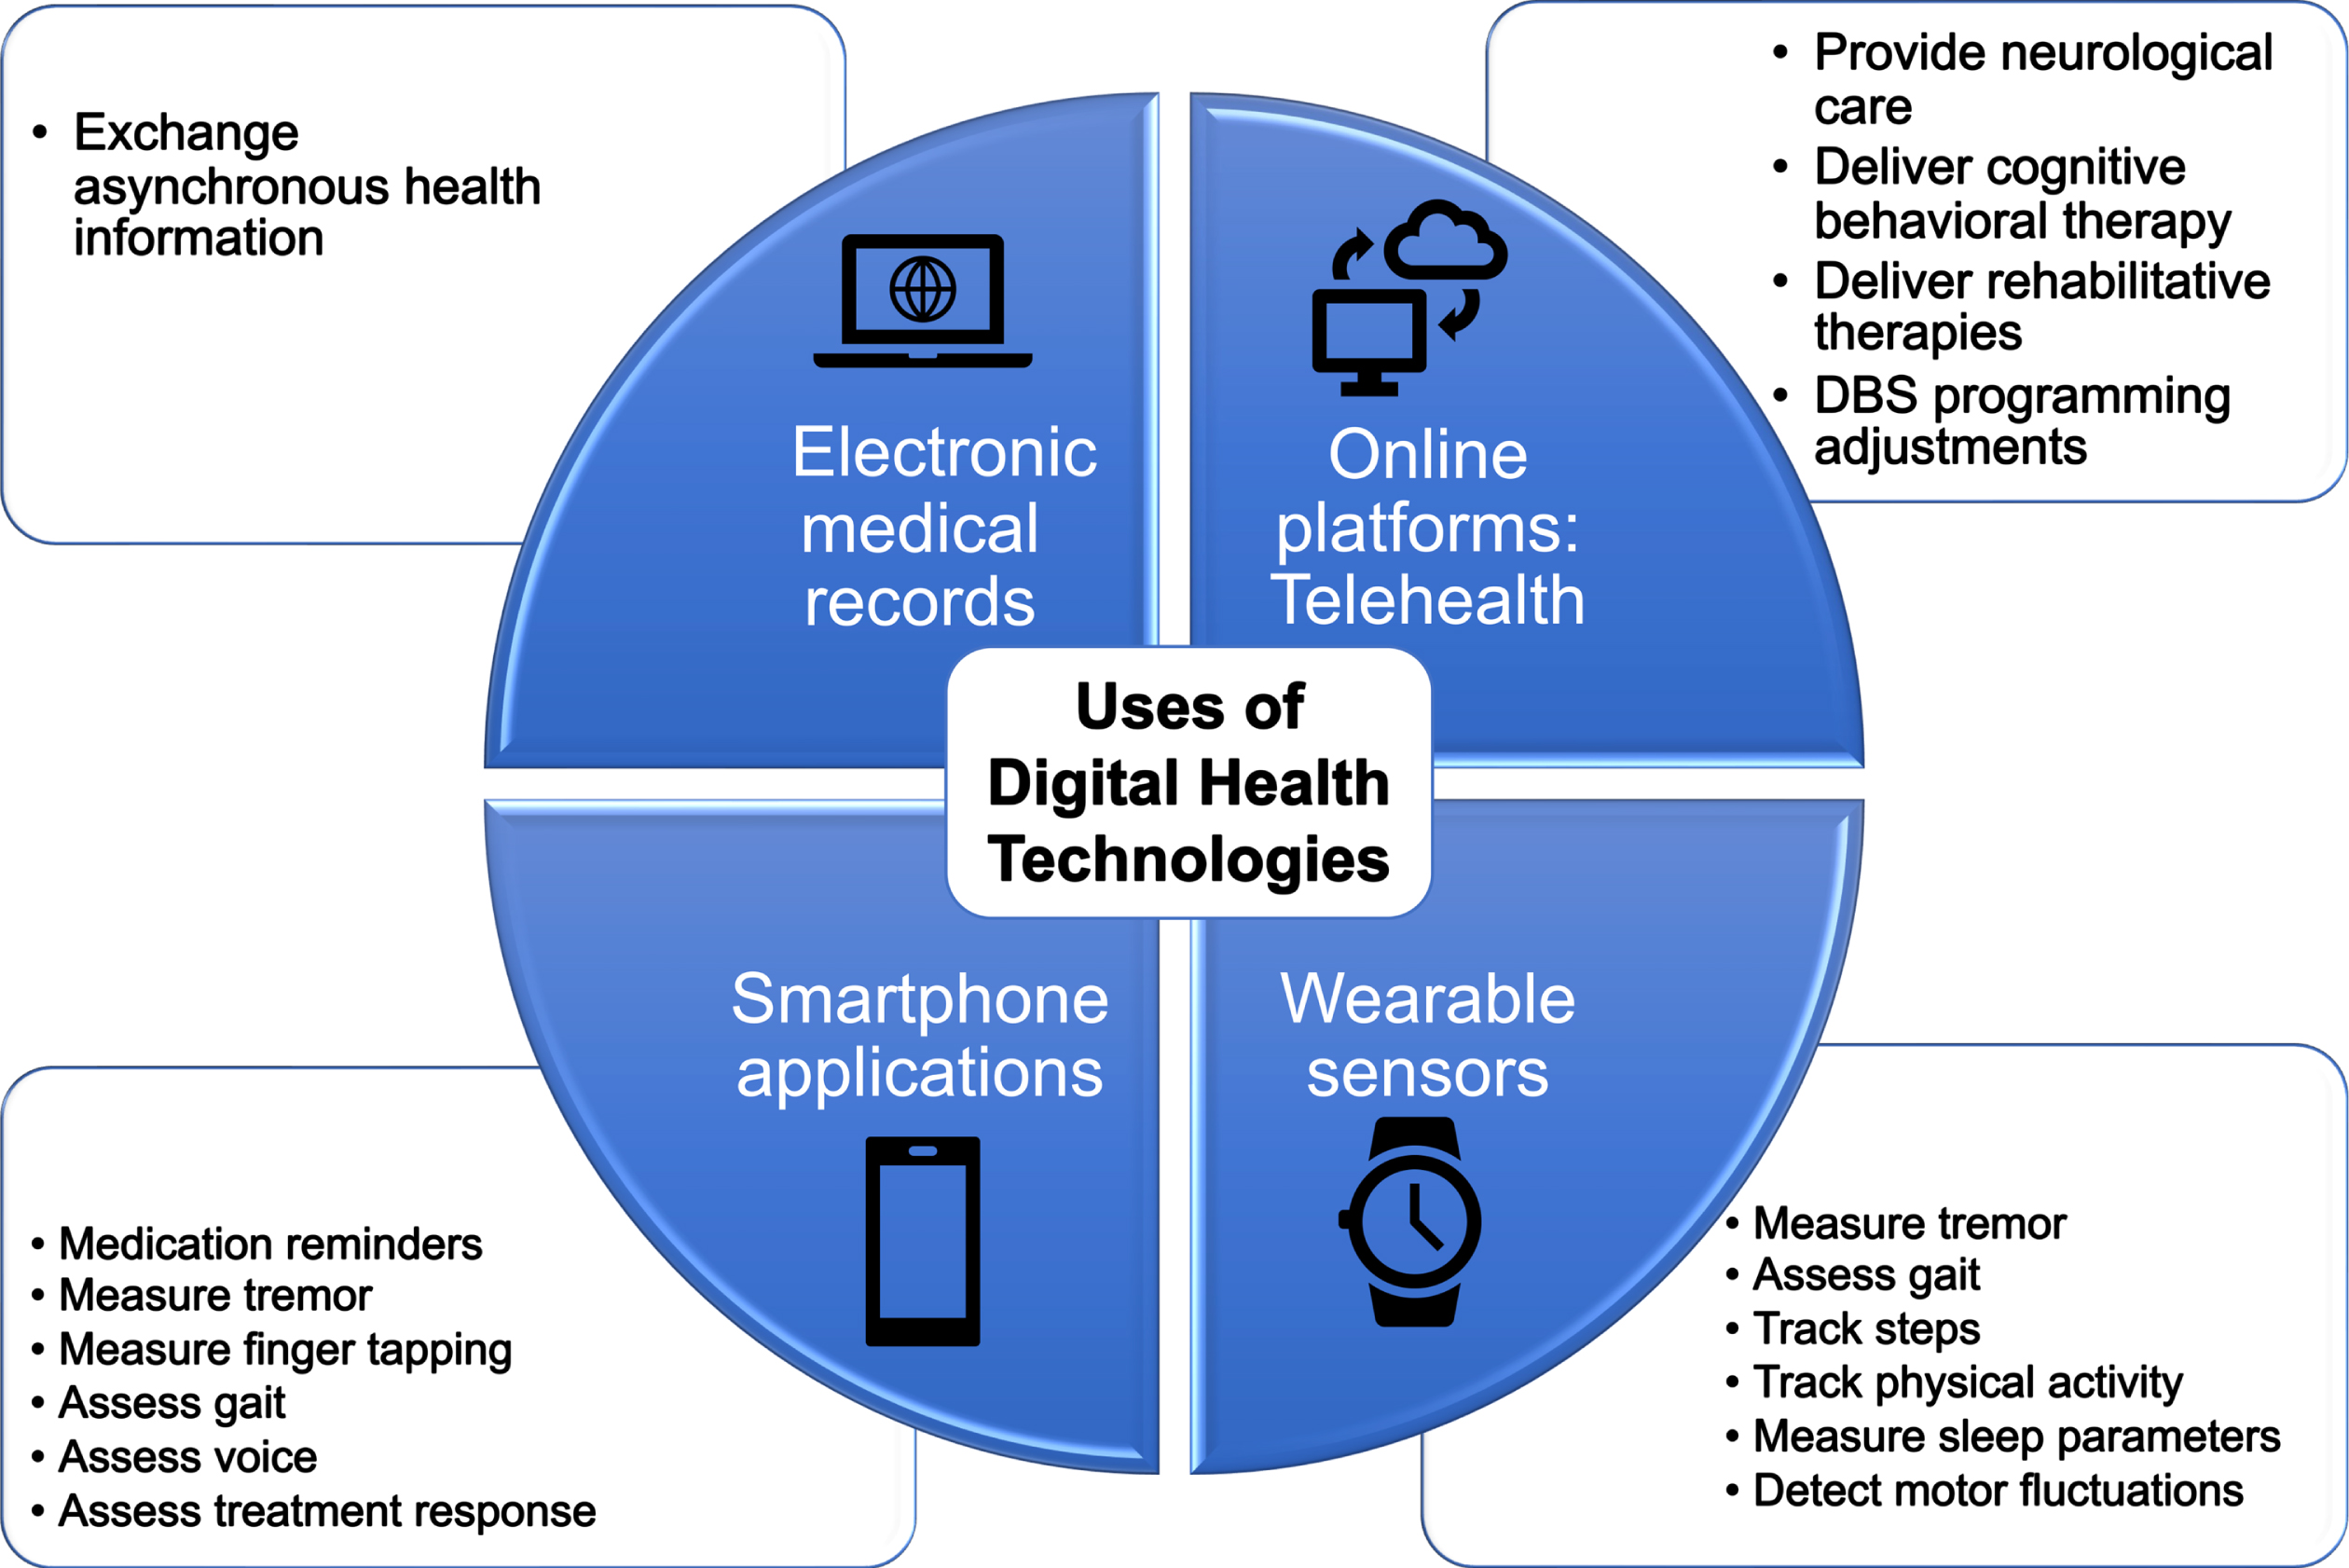 Uses of digital health technologies in Parkinson’s disease care.